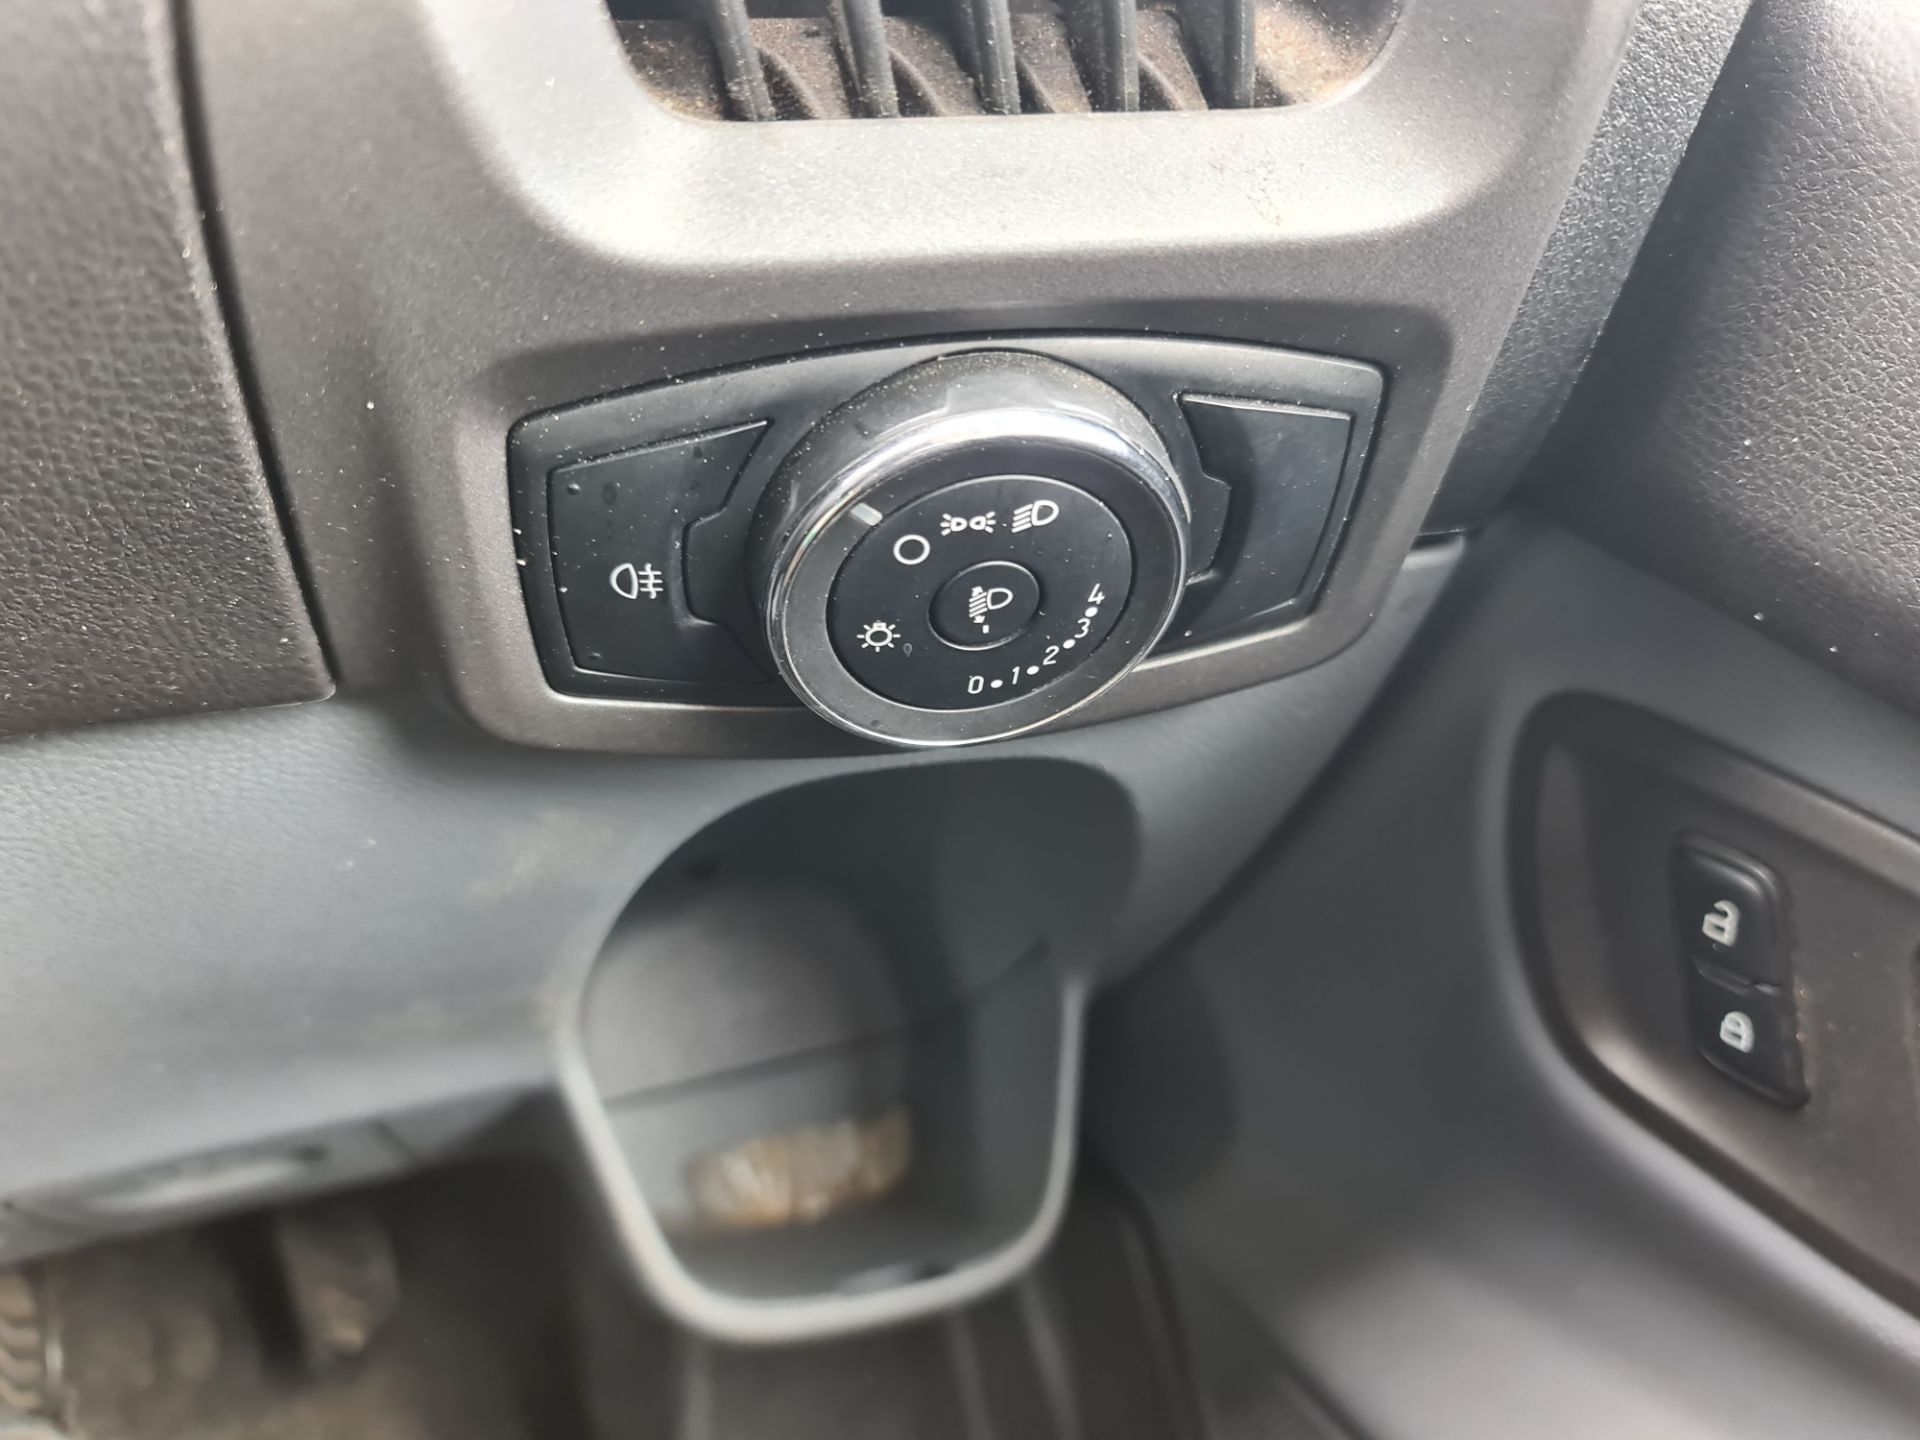 2018 Ford Transit Custom 270 panel van - Image 69 of 74